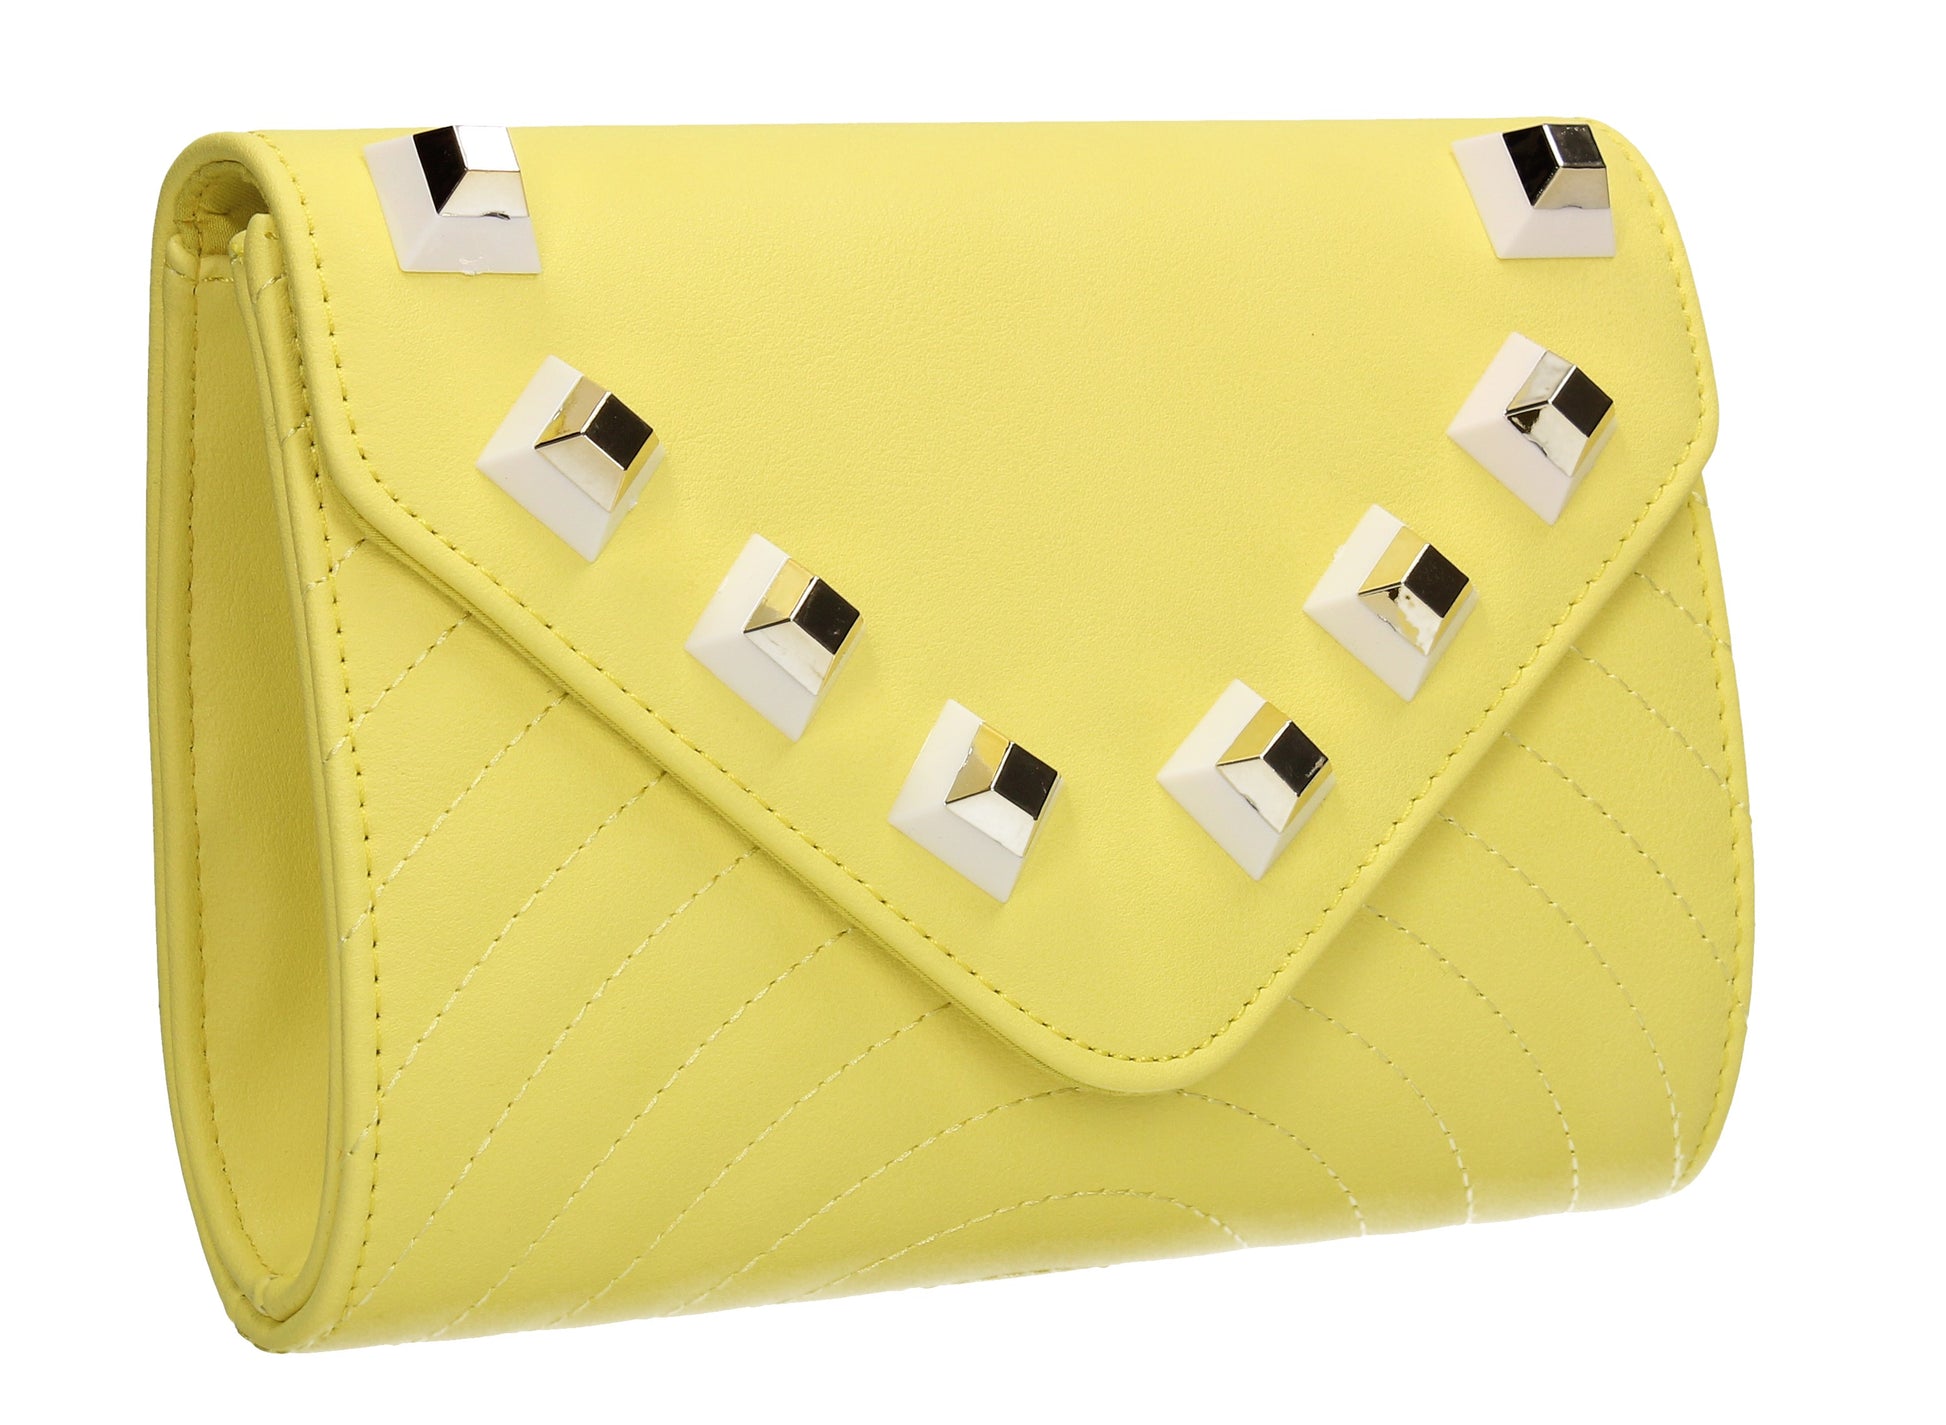 SWANKYSWANS Serafina Clutch Bag Yellow Cute Cheap Clutch Bag For Weddings School and Work